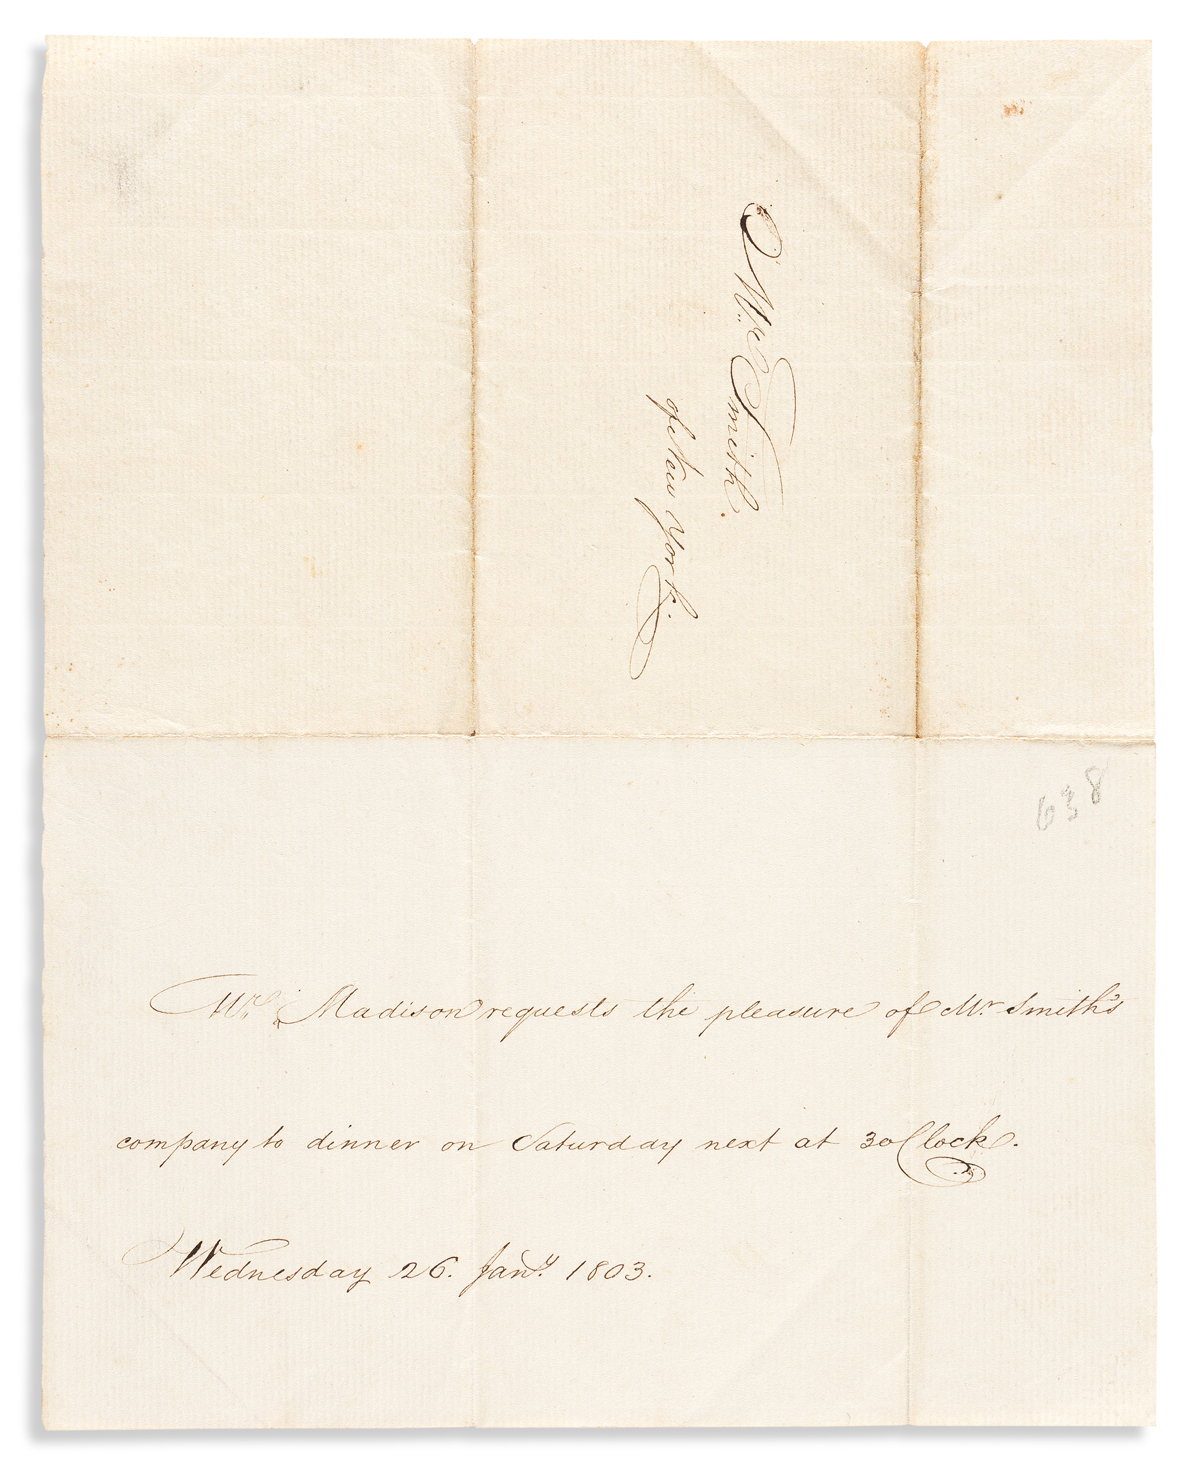 (PRESIDENTS--1803.) Invitation to visit Secretary of State James Madison for dinner.